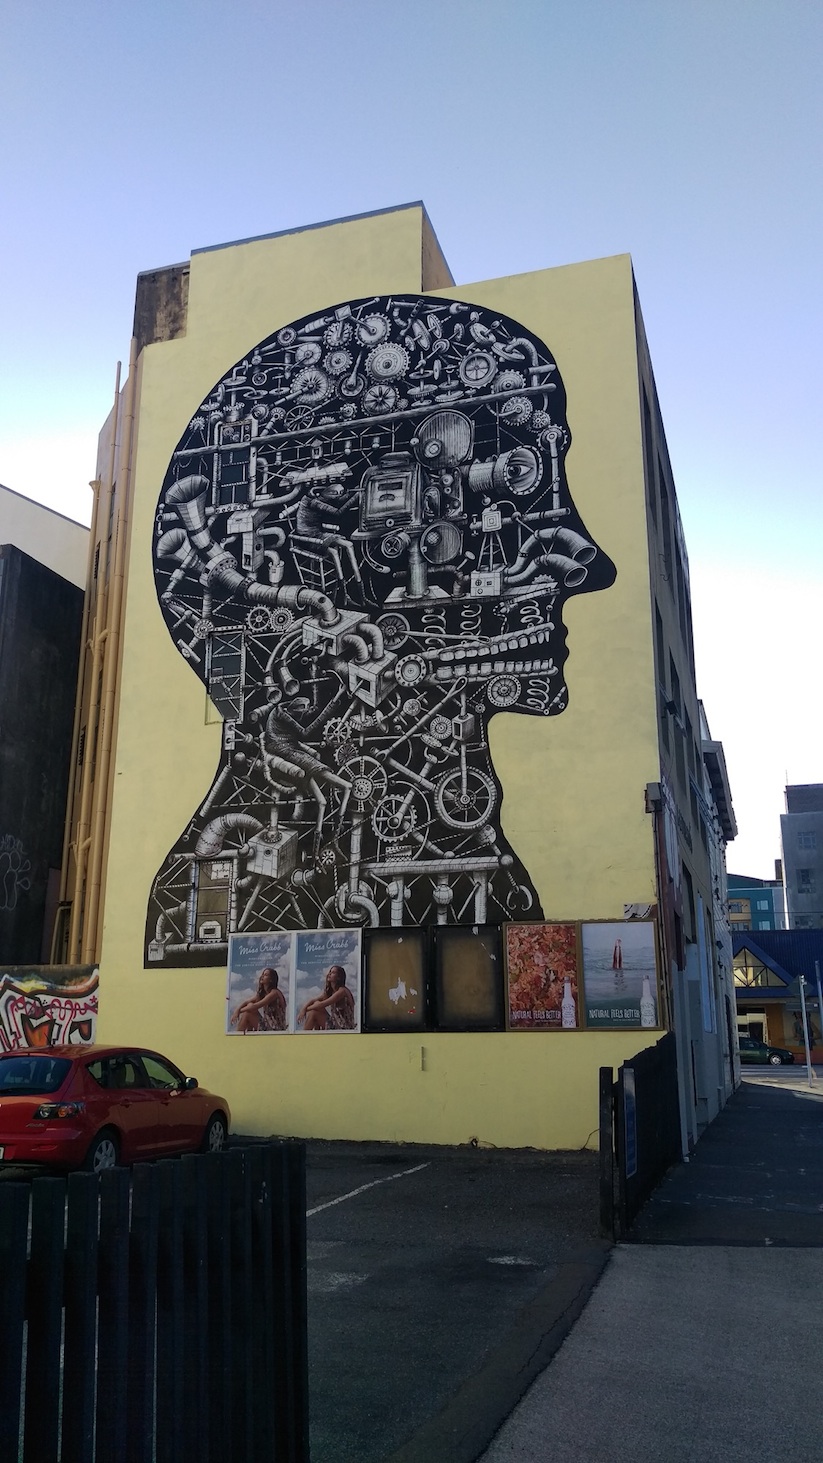 New_Great_Mural_by_British_Street_Artist_Phlegm_in_Wellington_2016_04